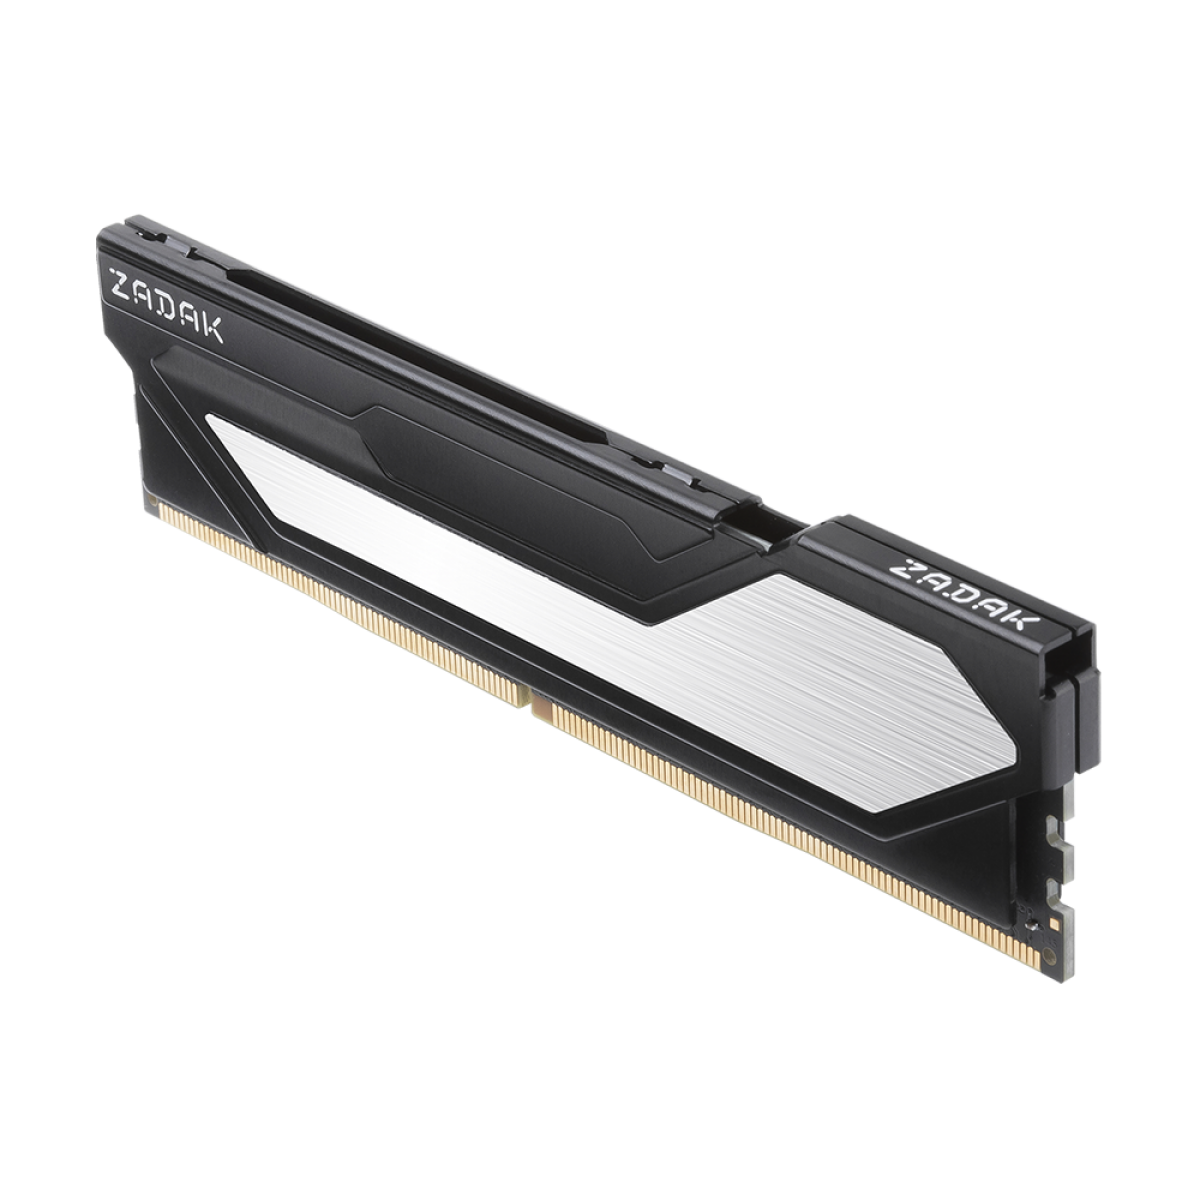 Memória DDR4 Zadak Twist, Black, 8GB, 3000MHz, ZD4-TWS30C08-08GYB1